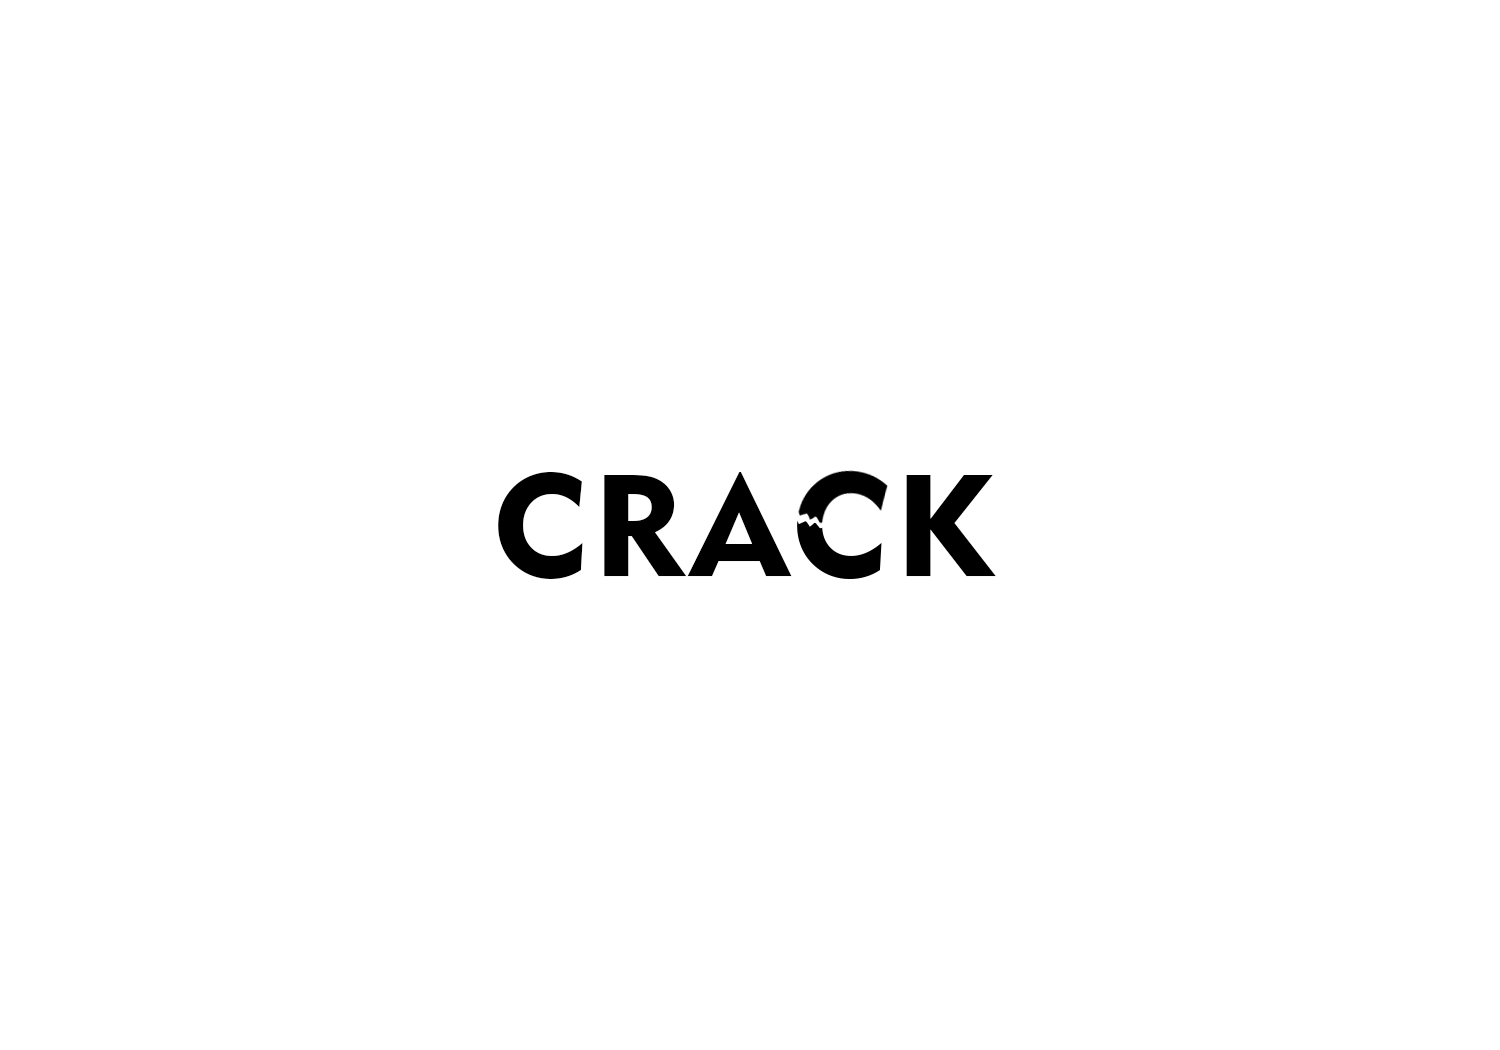 Crack Logo - Creative Designs Idea Free | Creative Ideas For Designers